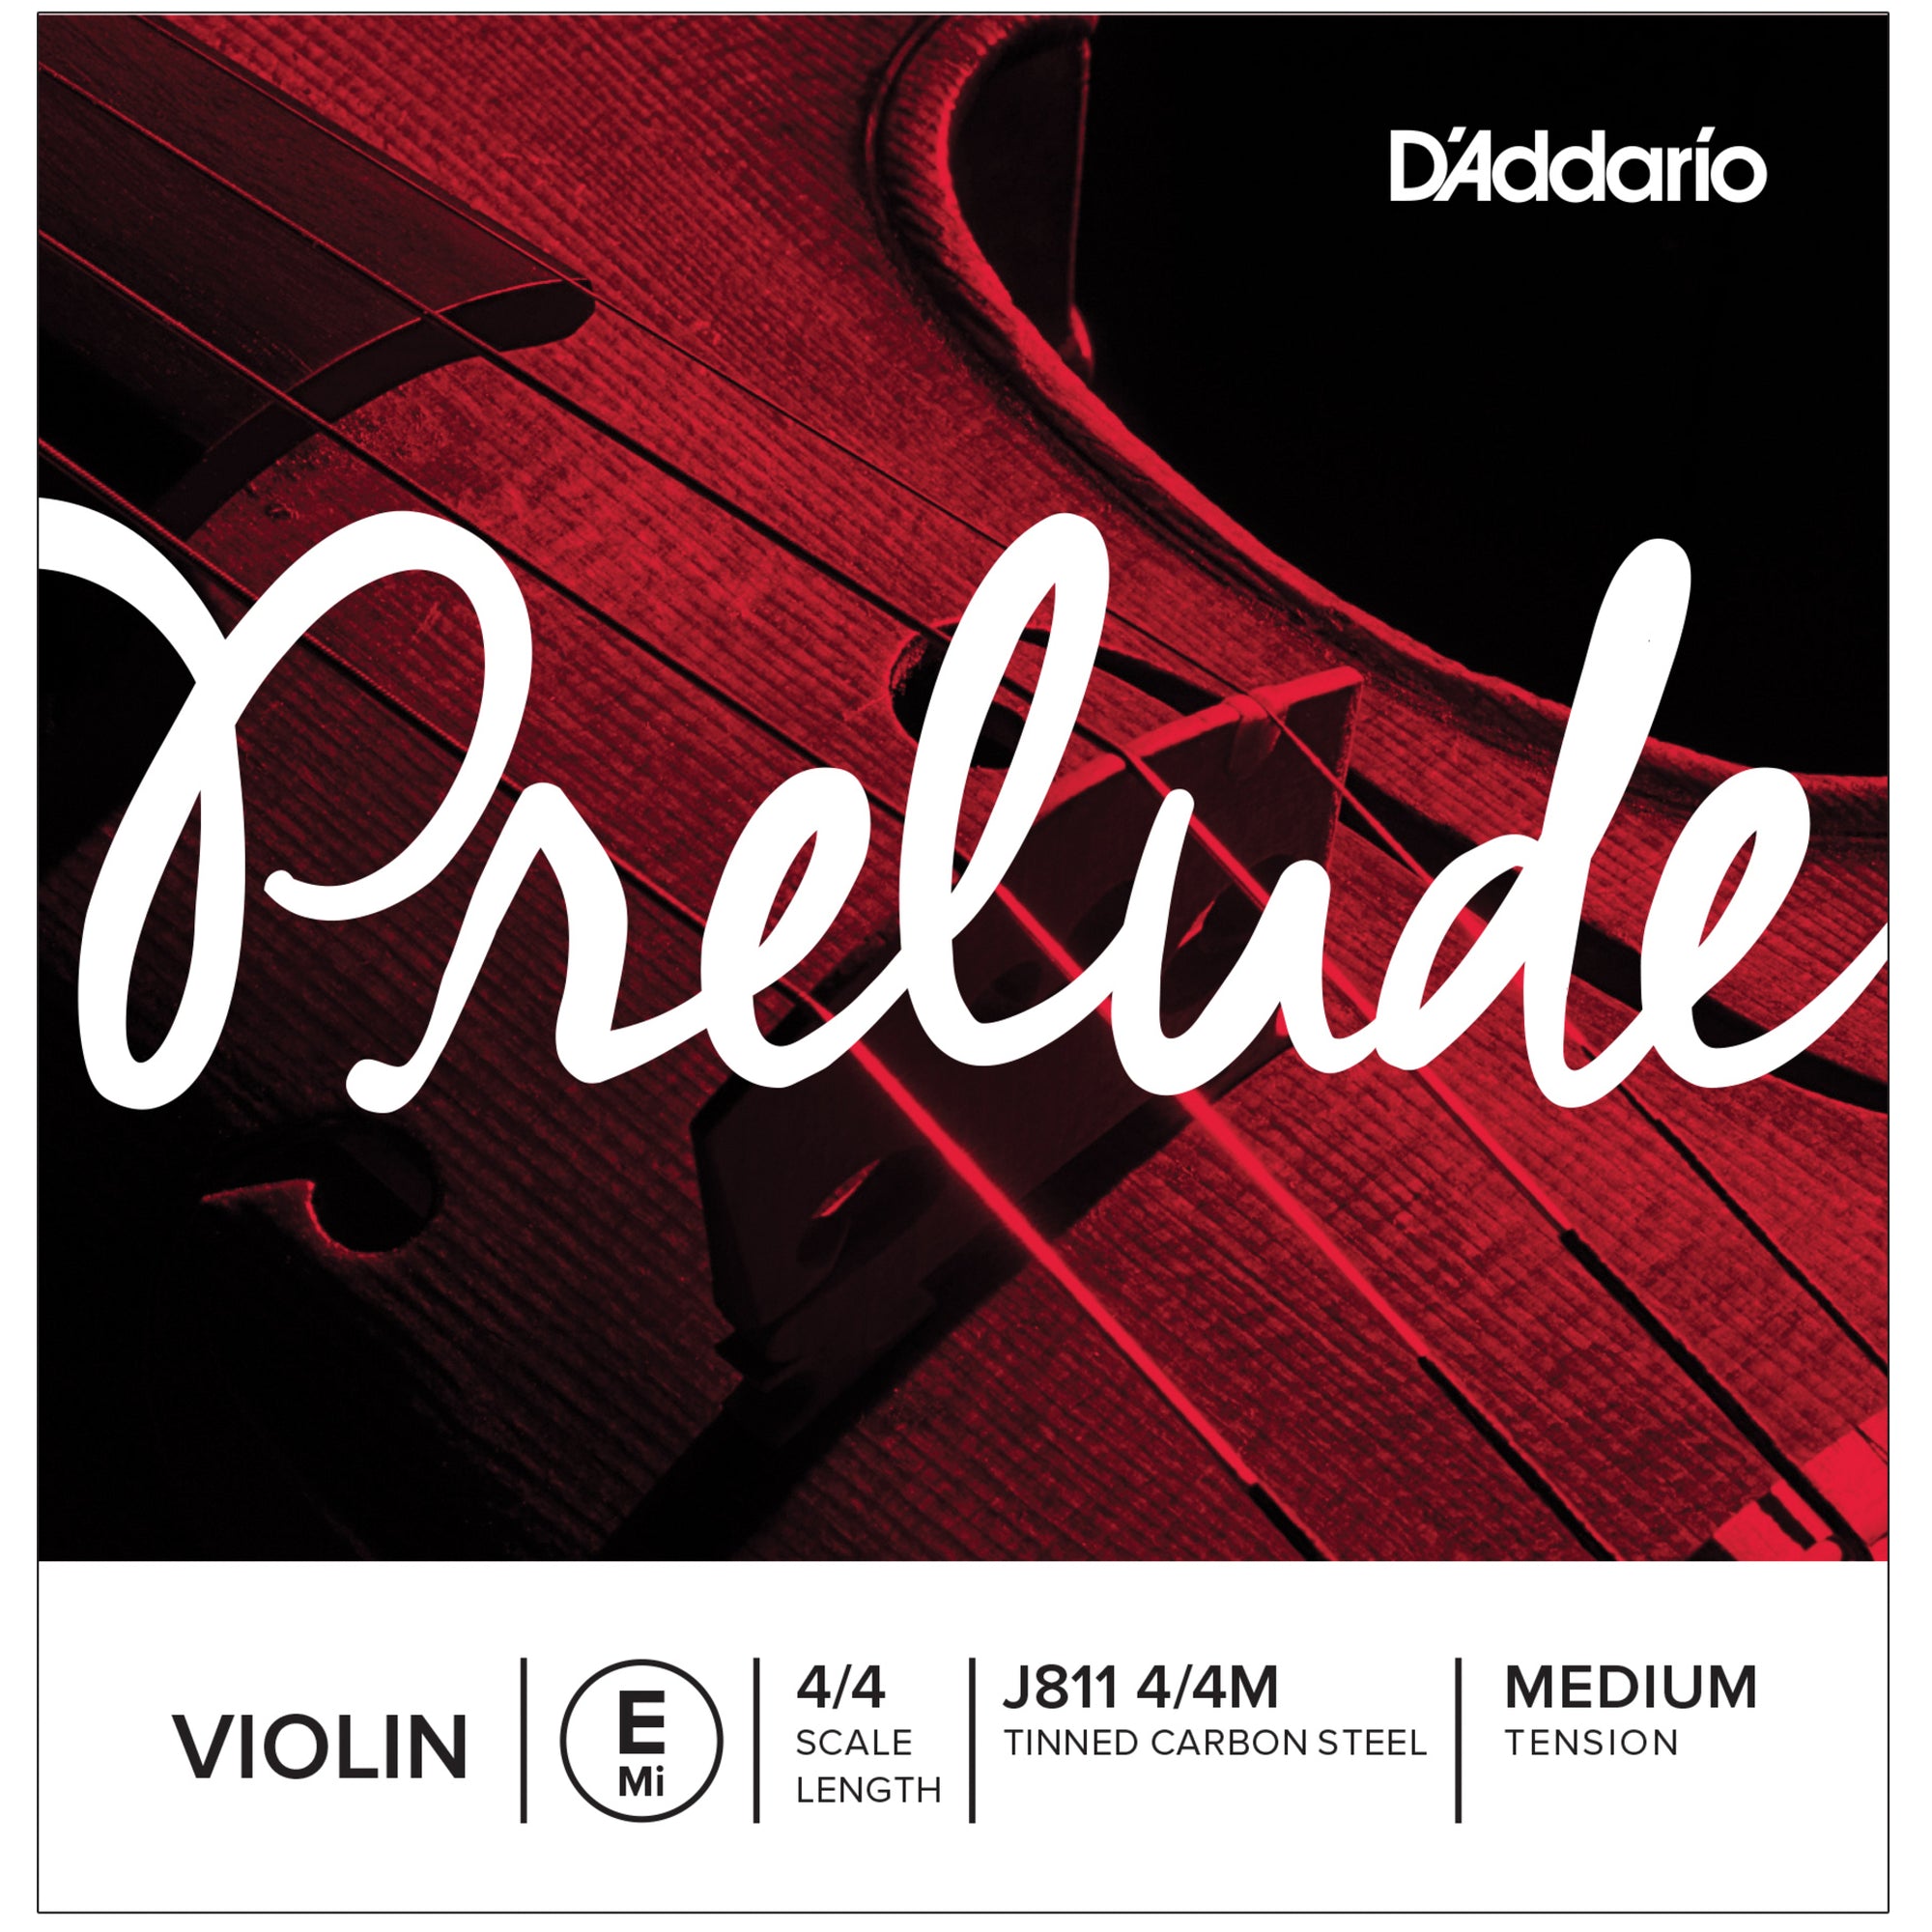 D'Addario J811 4/4M Prelude 4/4 Full E Violin Single String Medium J811